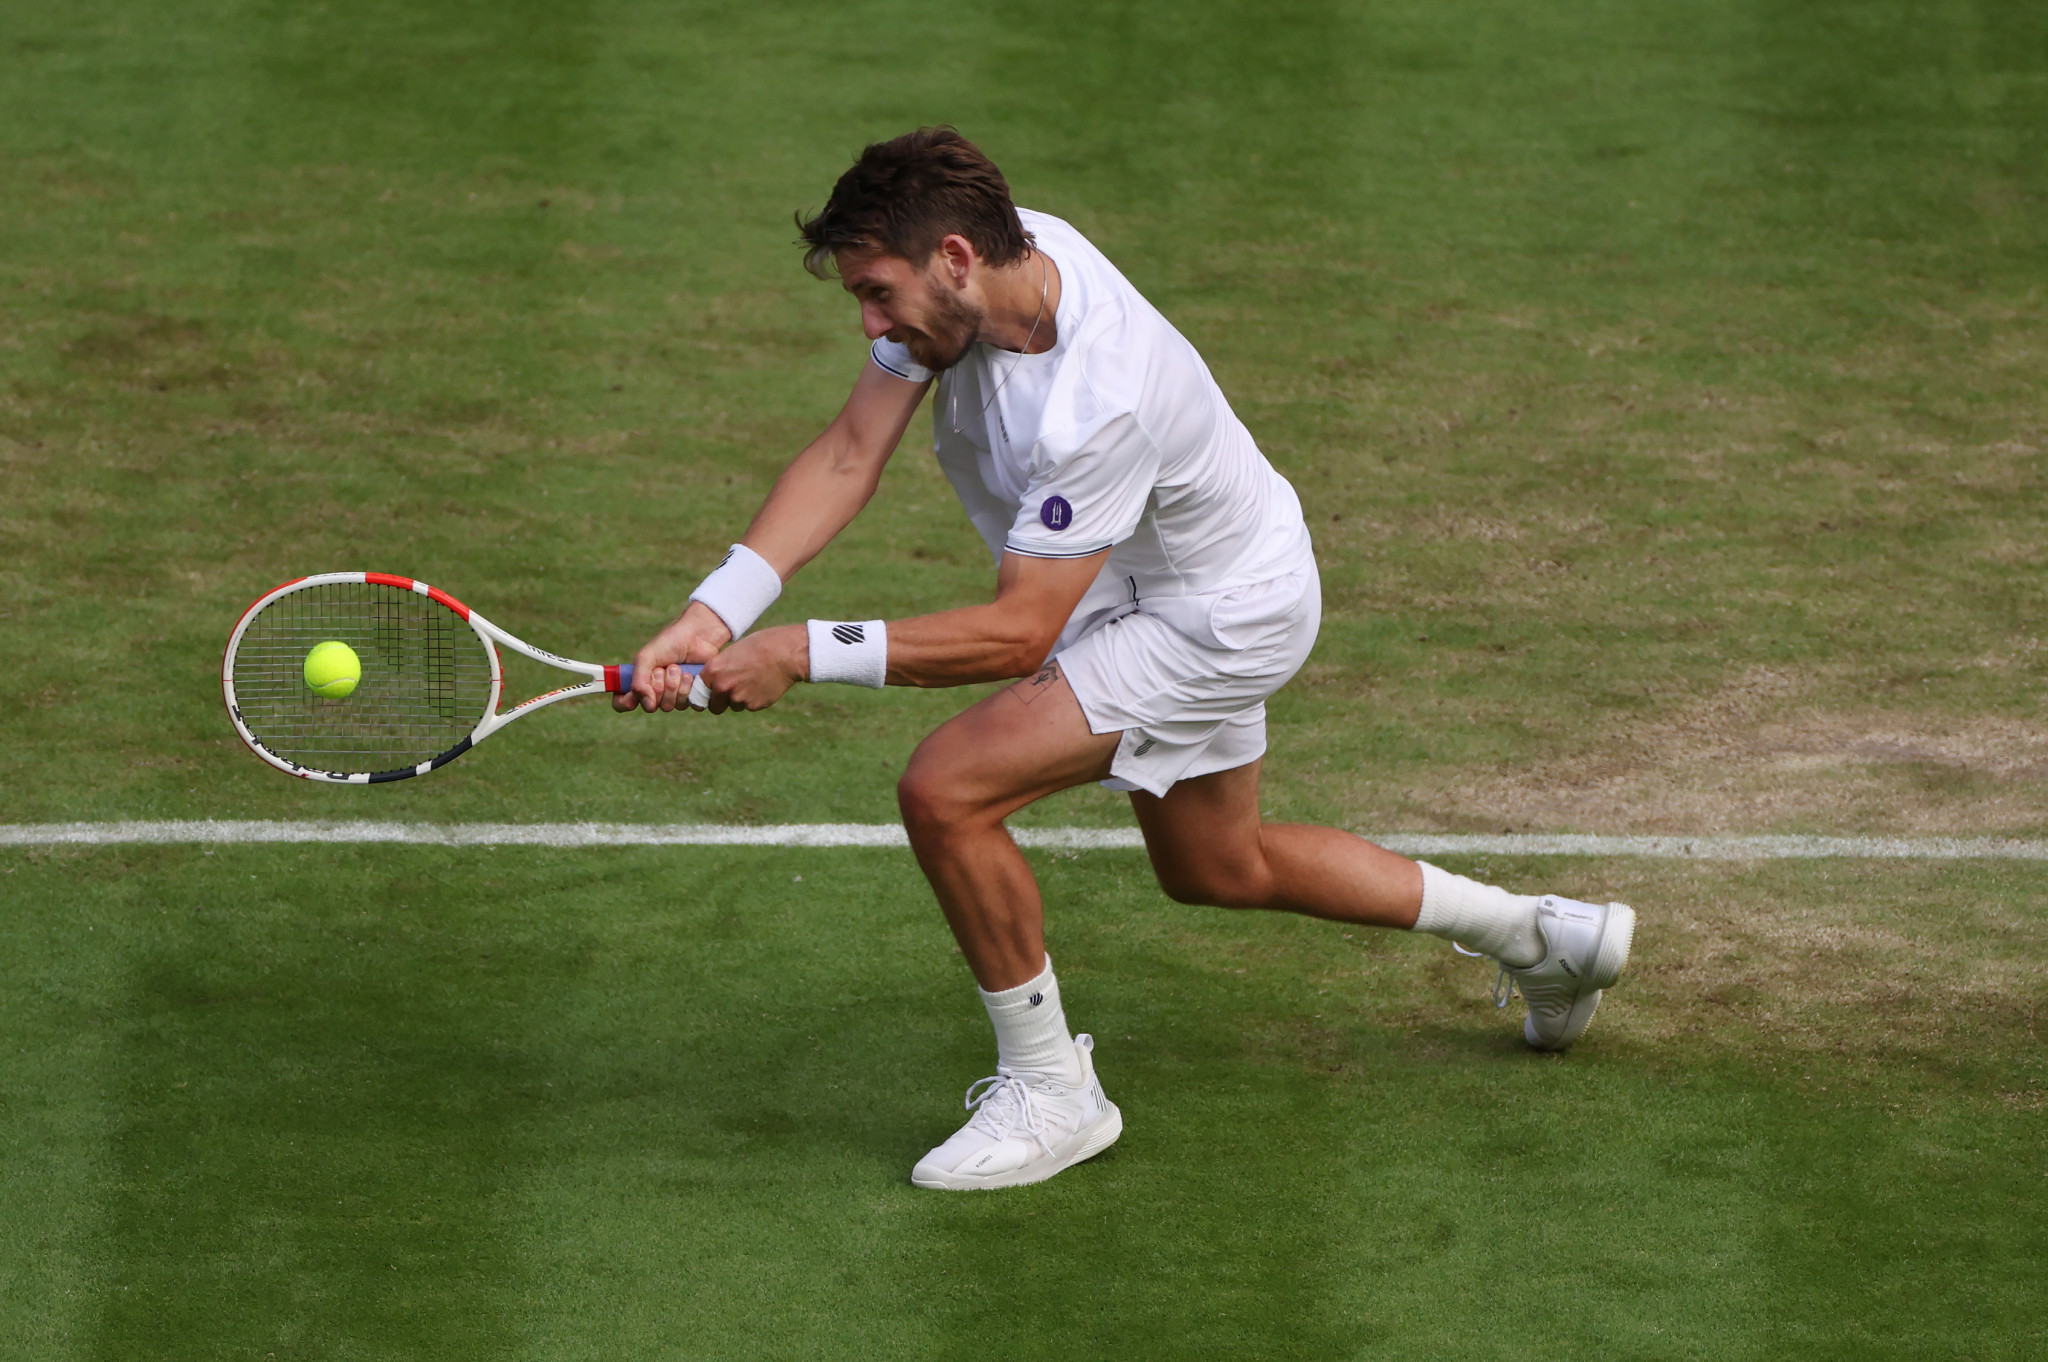 British players move into fourth round as Djokovic wins all-Serbian Wimbledon match